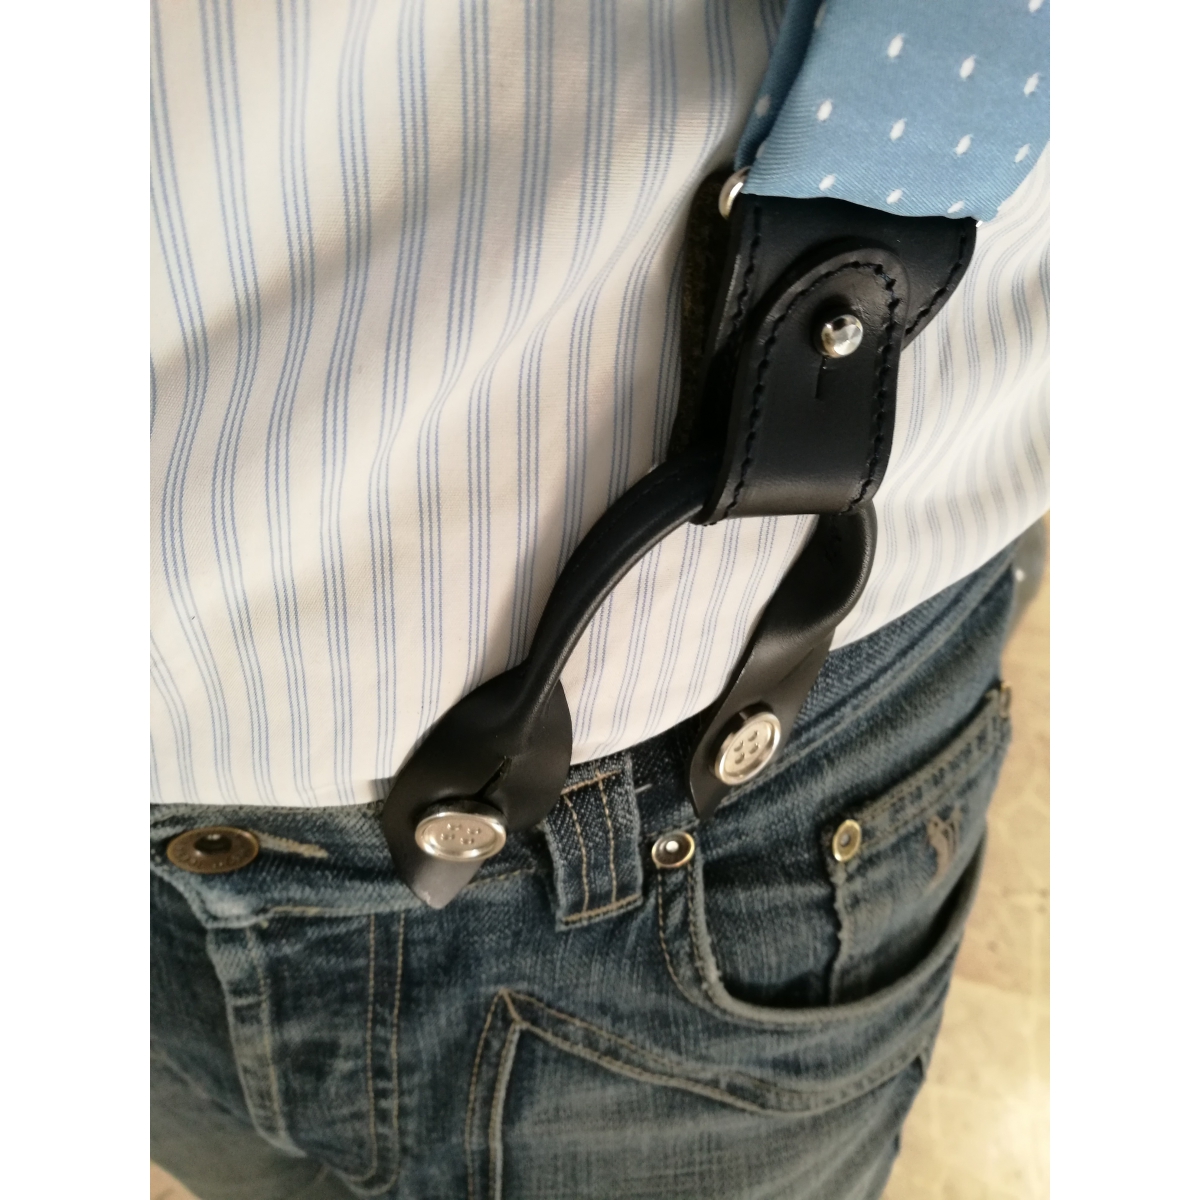 Clip on suspender buttons, black